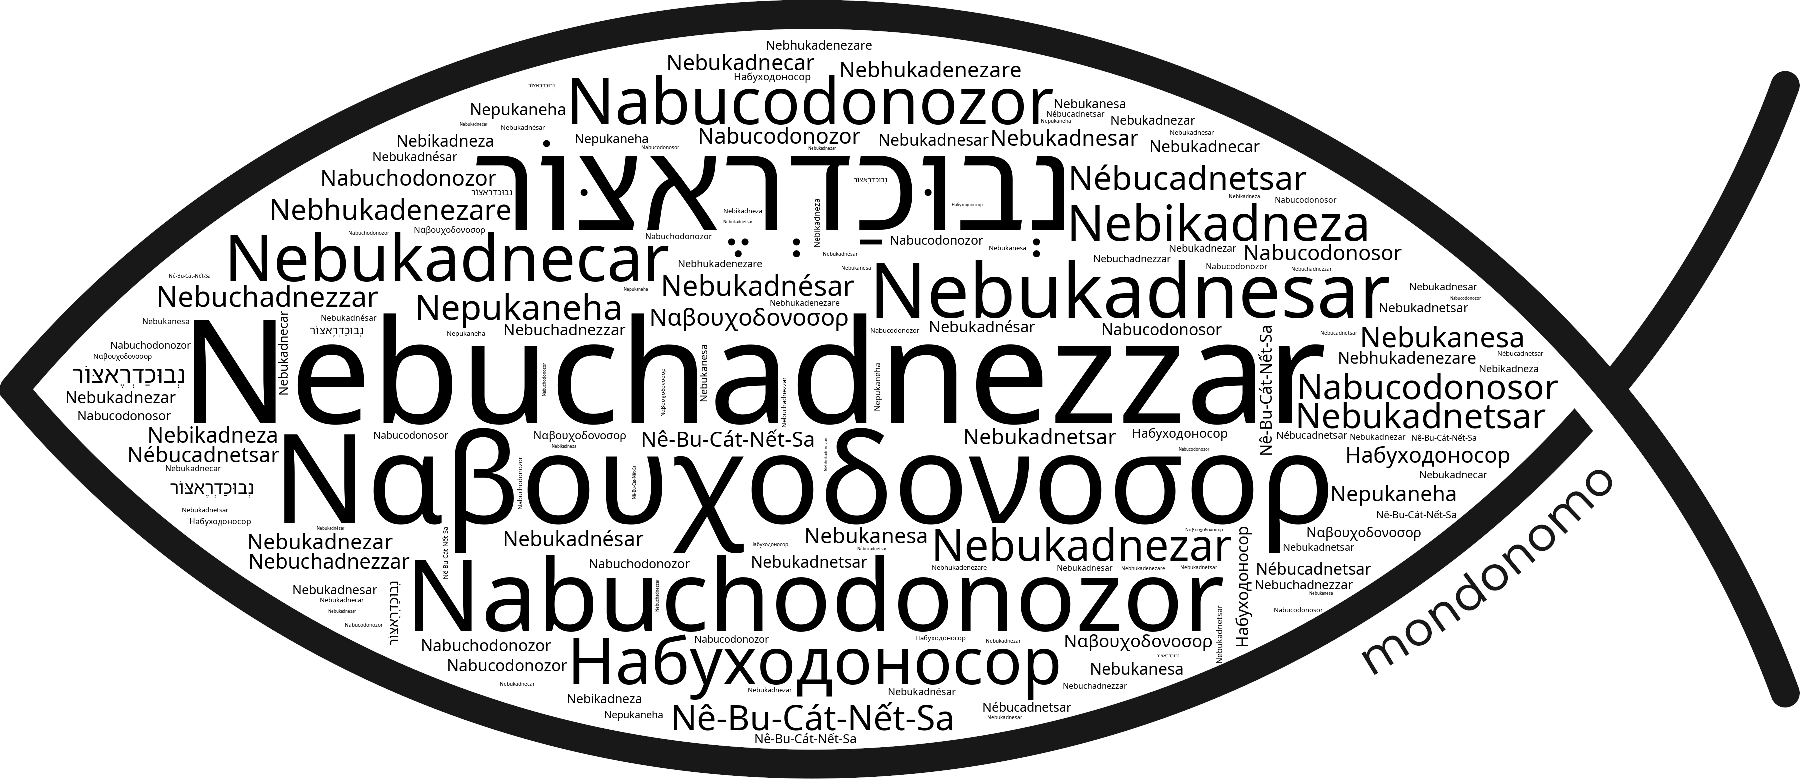 Name Nebuchadnezzar in the world's Bibles